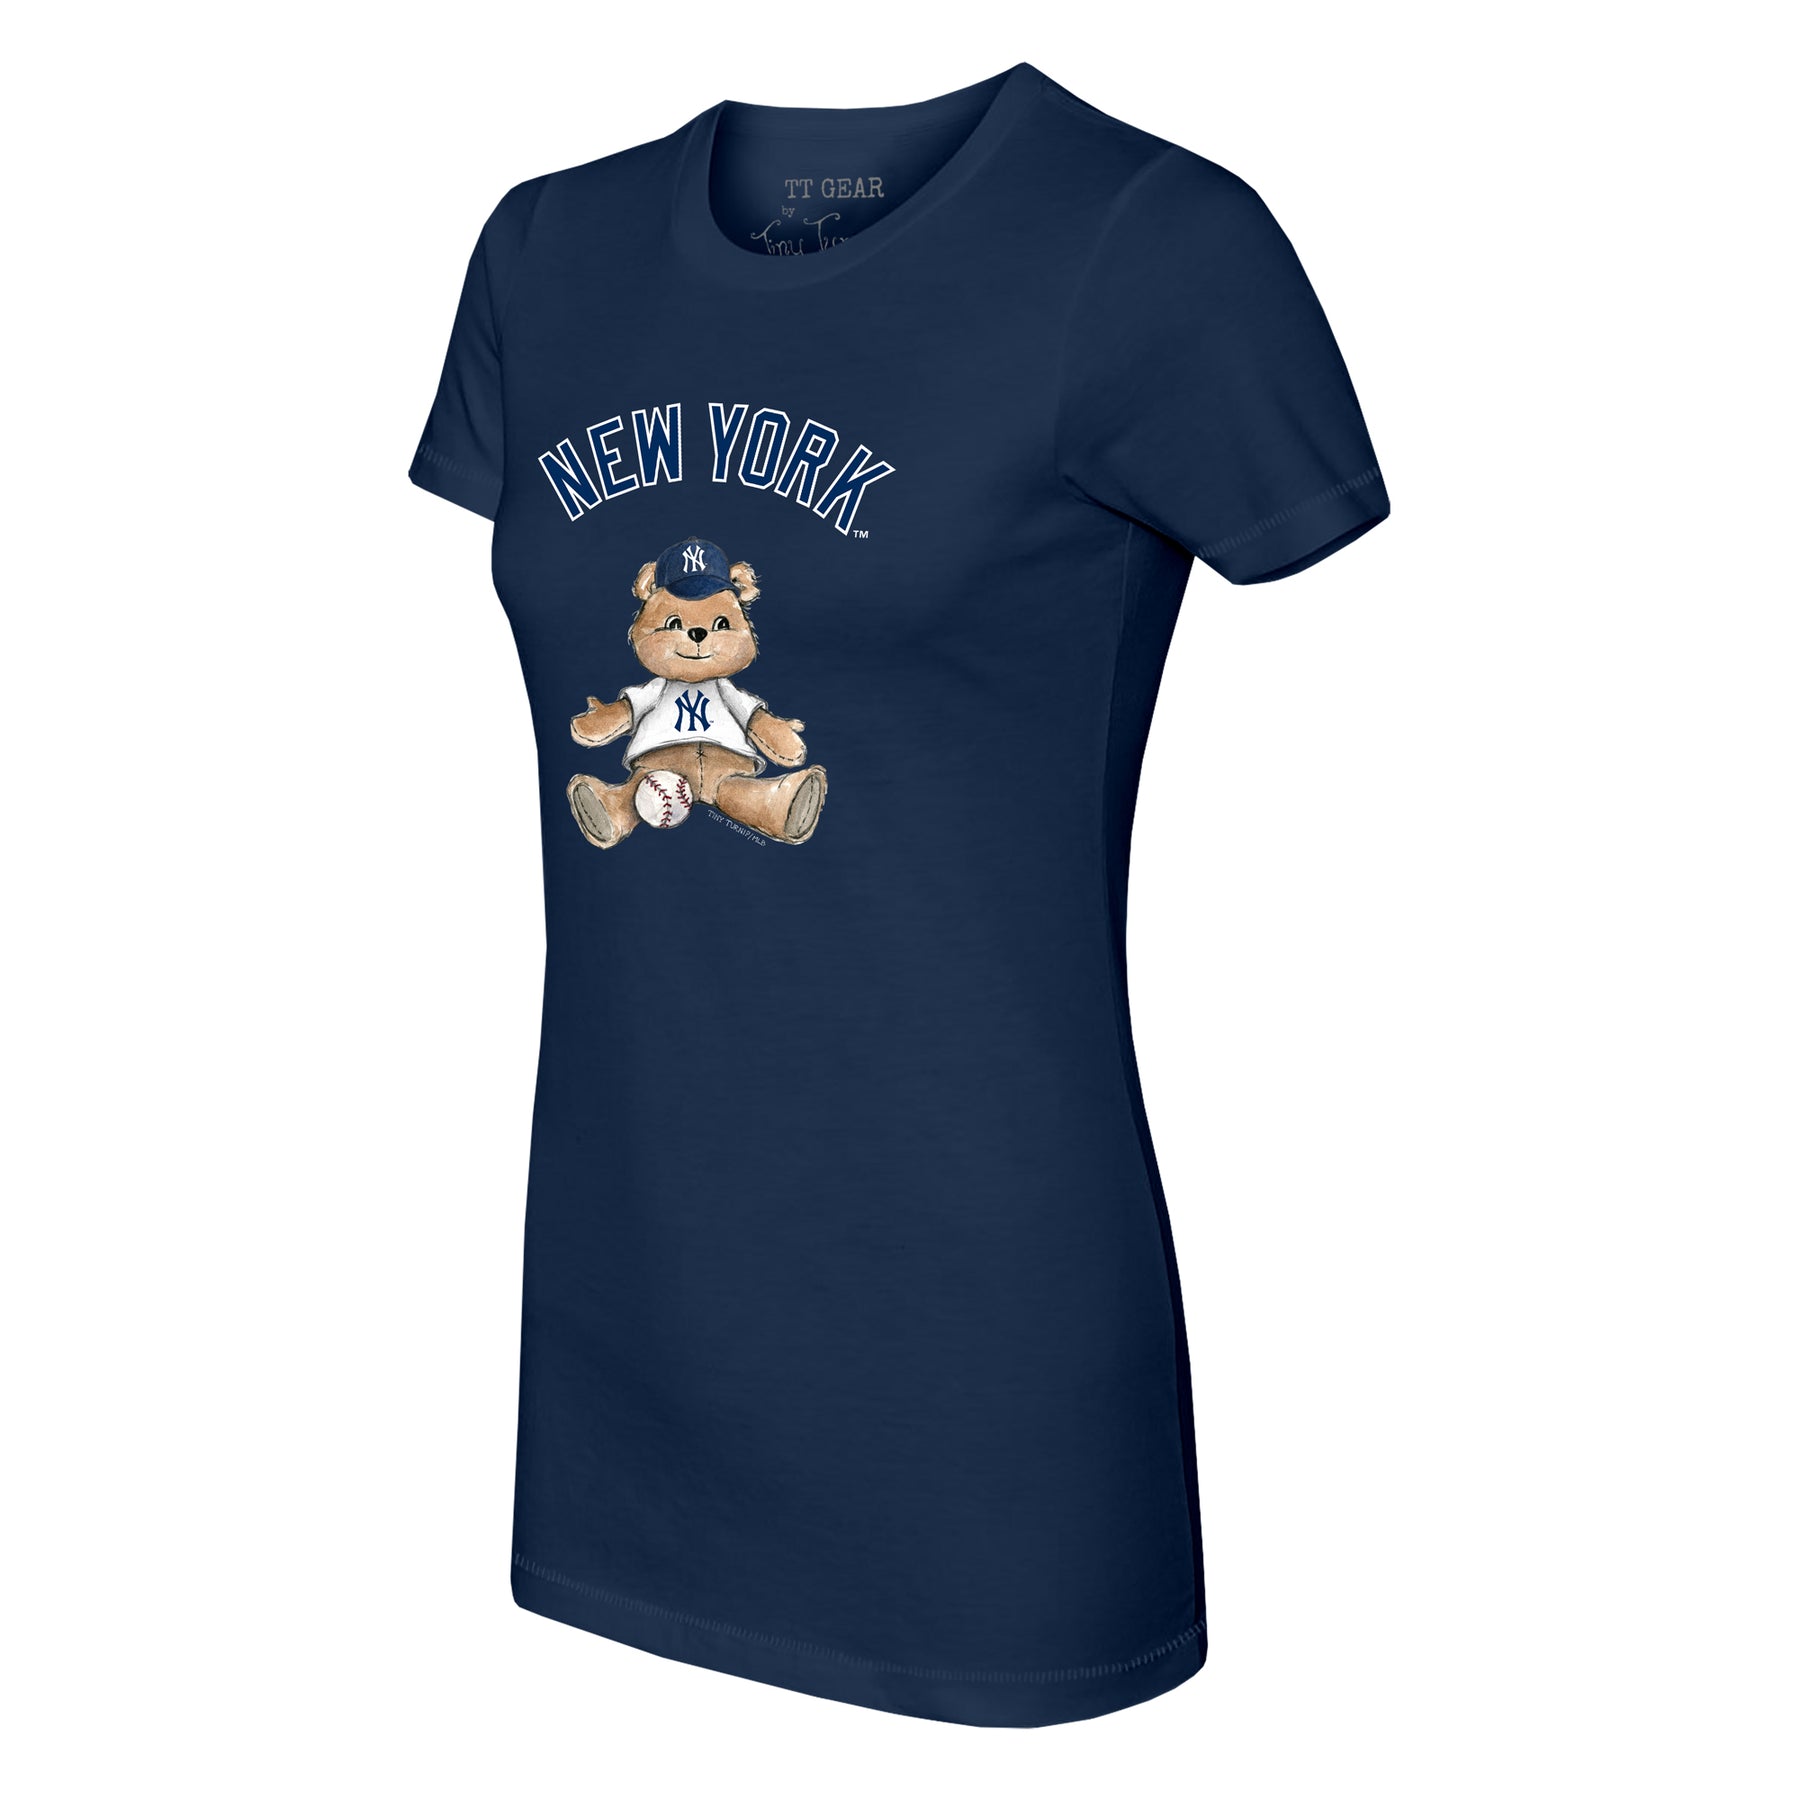 New York Yankees Boy Teddy Tee Shirt